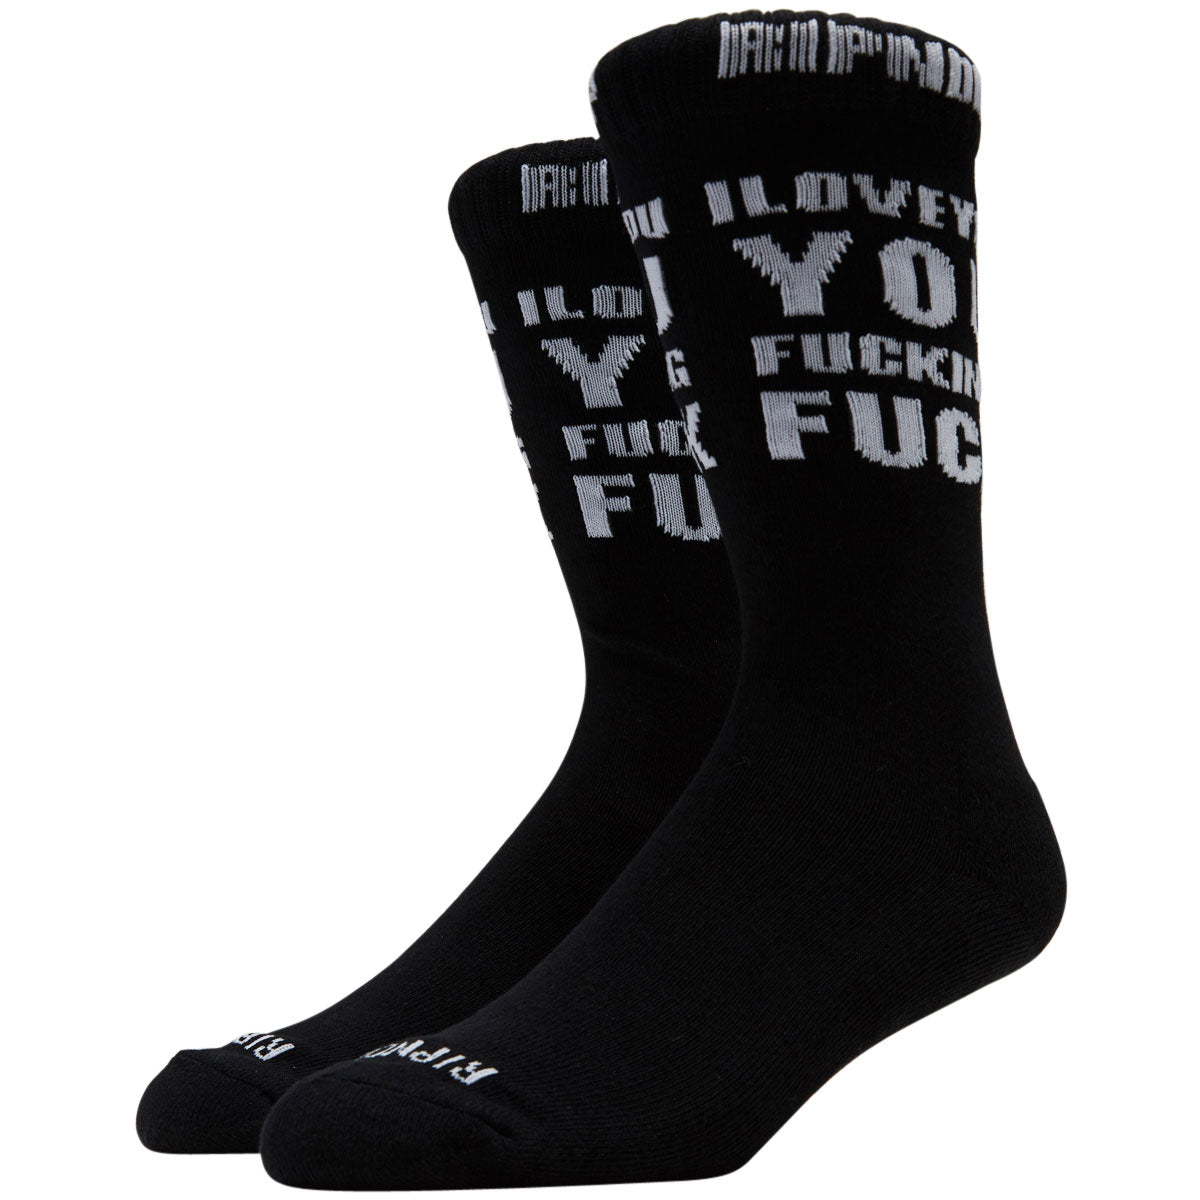 RIPNDIP Ily Fuckin Fuck Socks - Black image 1